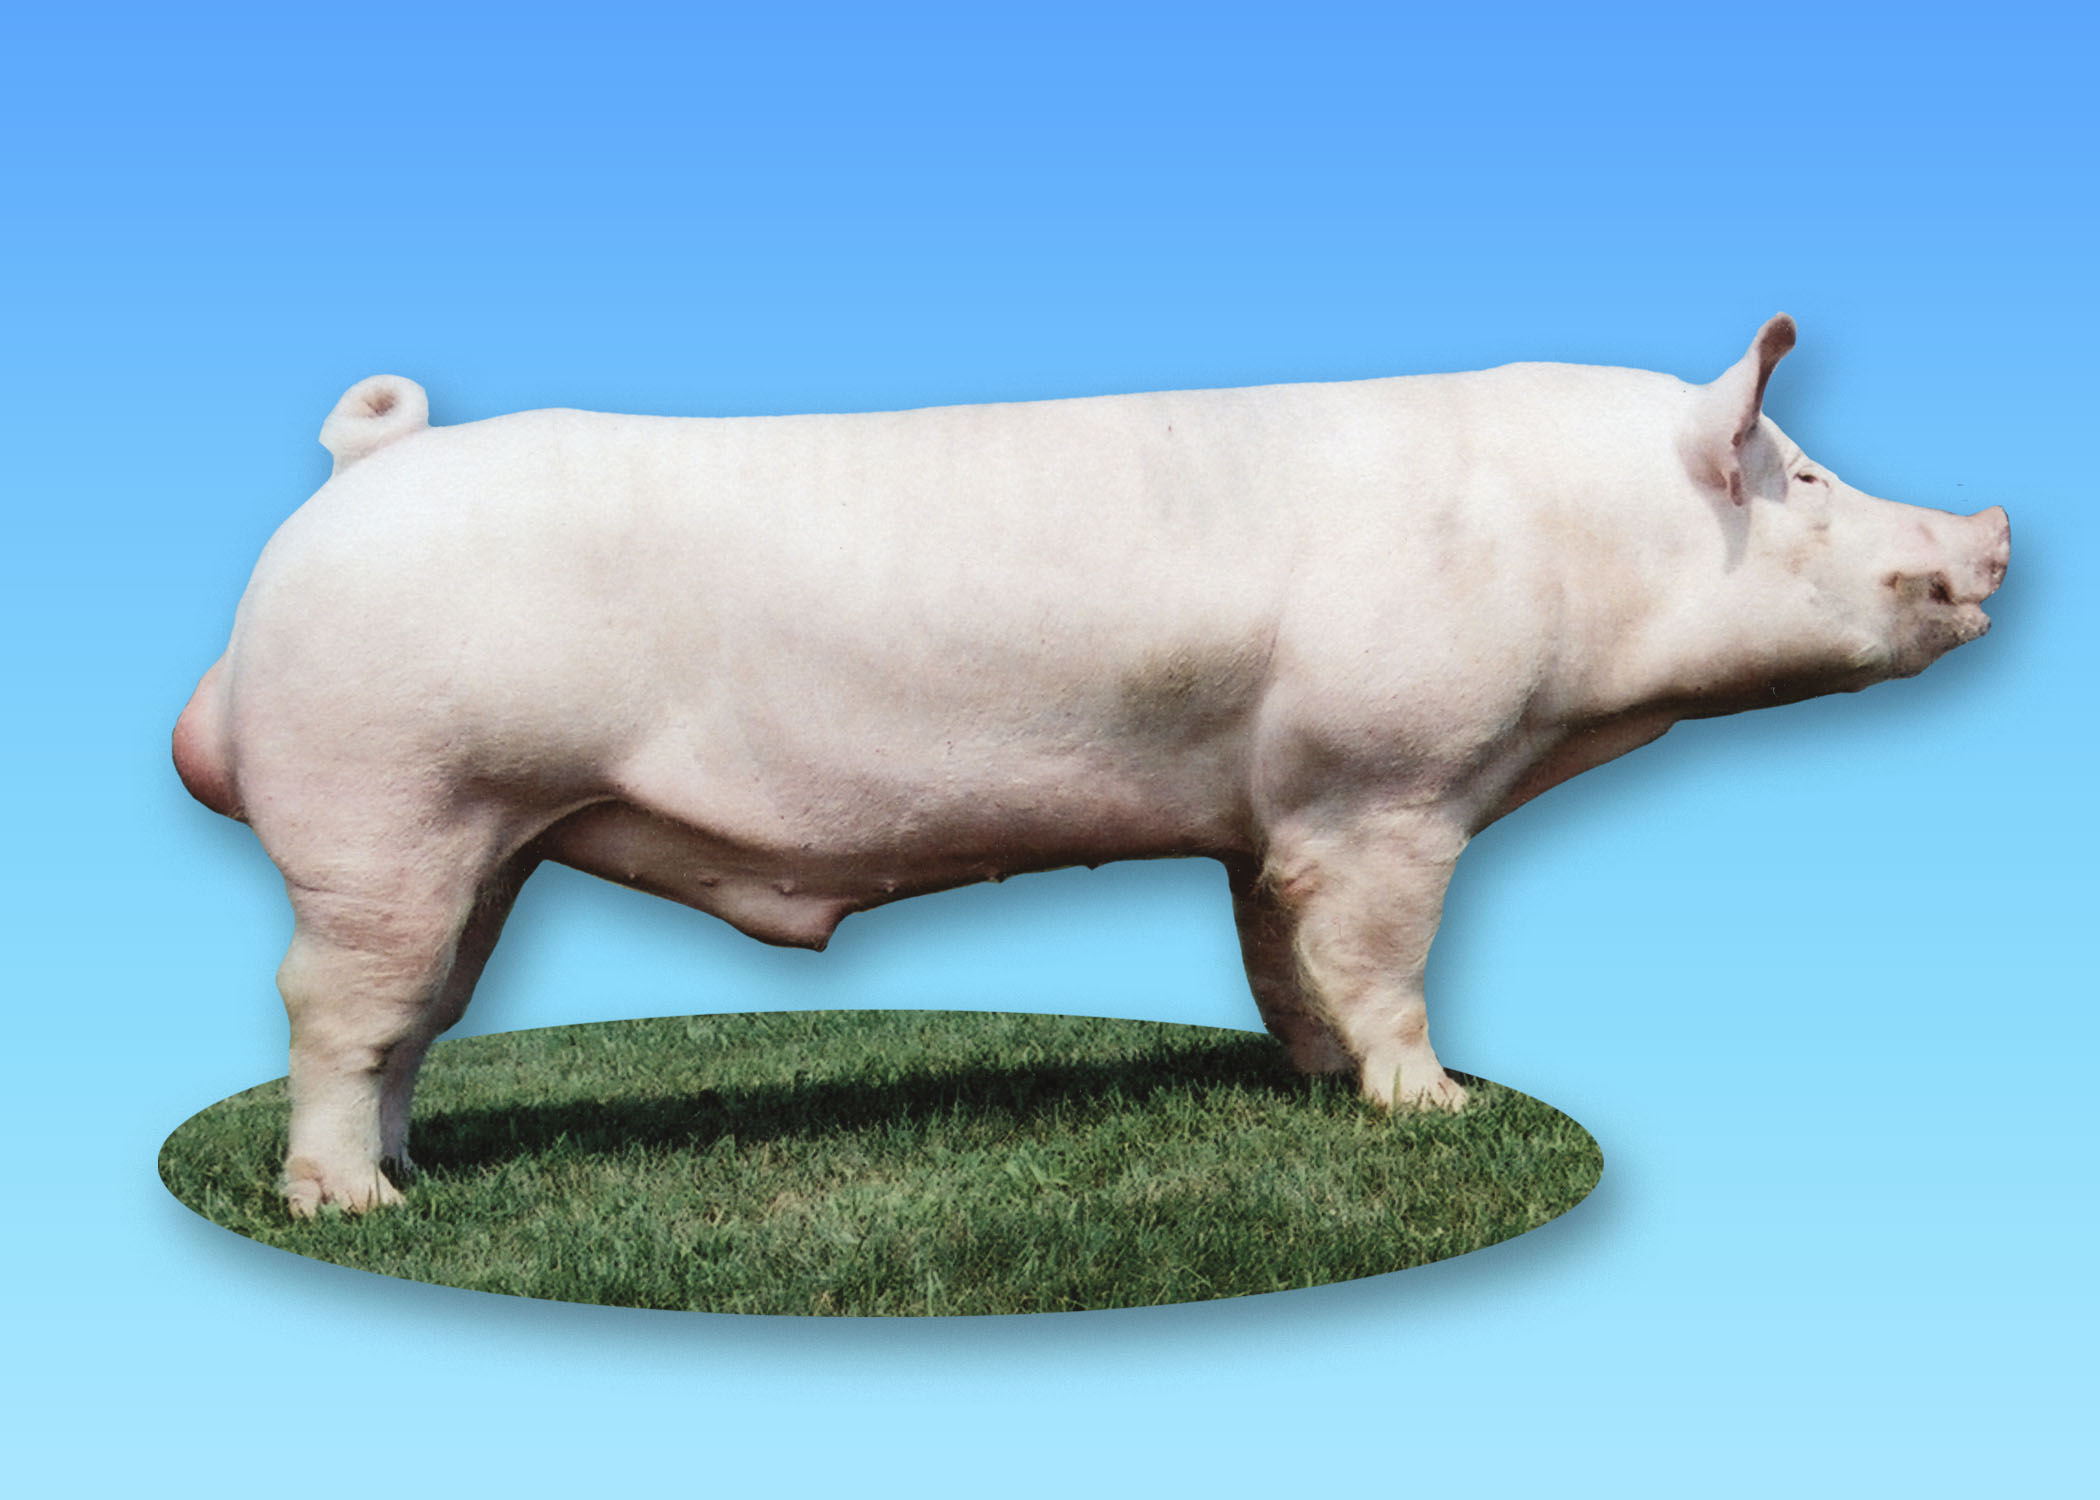 Yorkshire boar. Photo courtesy of National Swine Registry